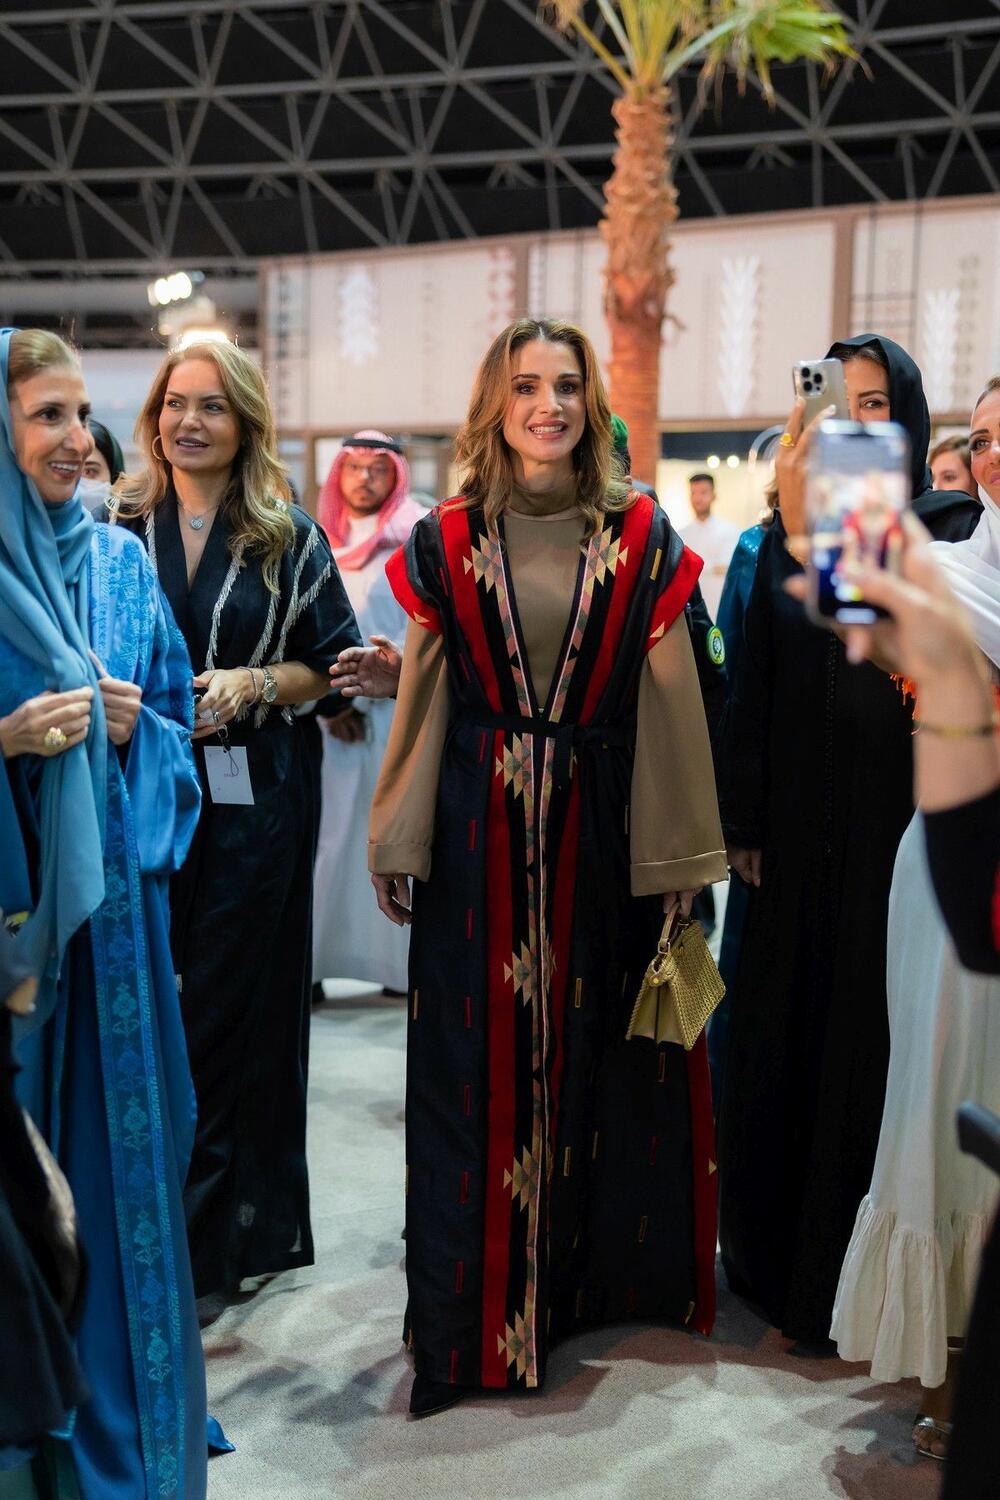 Kraljica Ranija al Abdulah u psluk-haljini jordanskog brenda Funtazza Designs